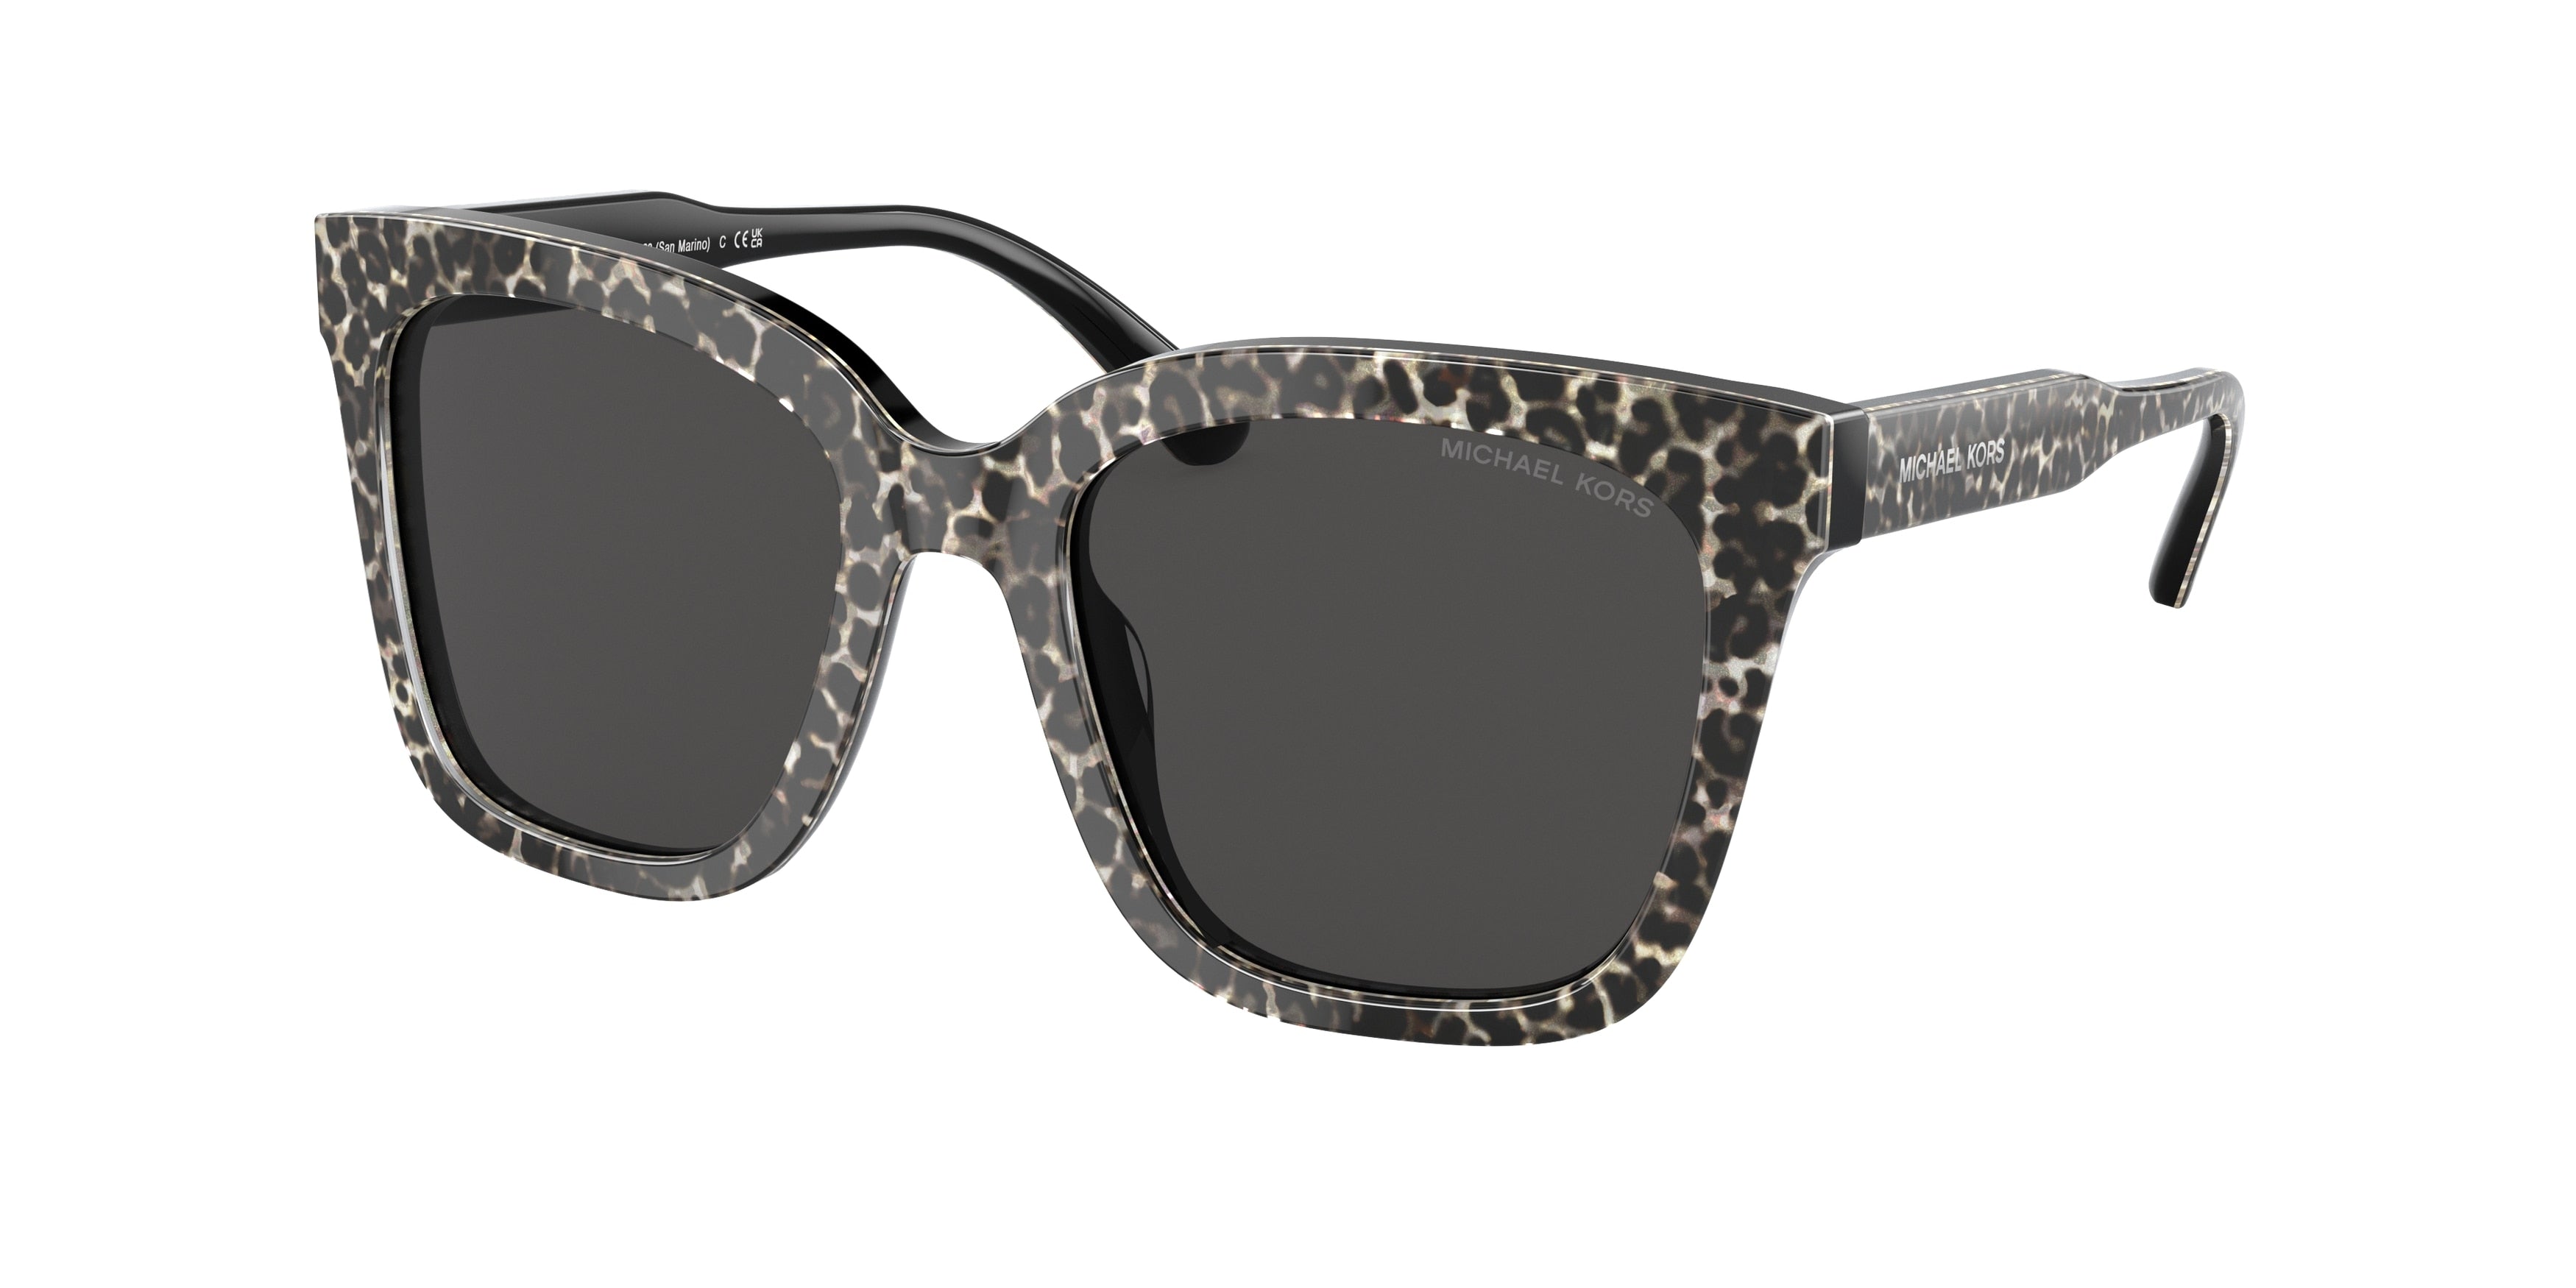 Michael Kors SAN MARINO MK2163 Square Sunglasses  391687-Grey And Black Leopard 52-140-19 - Color Map Grey